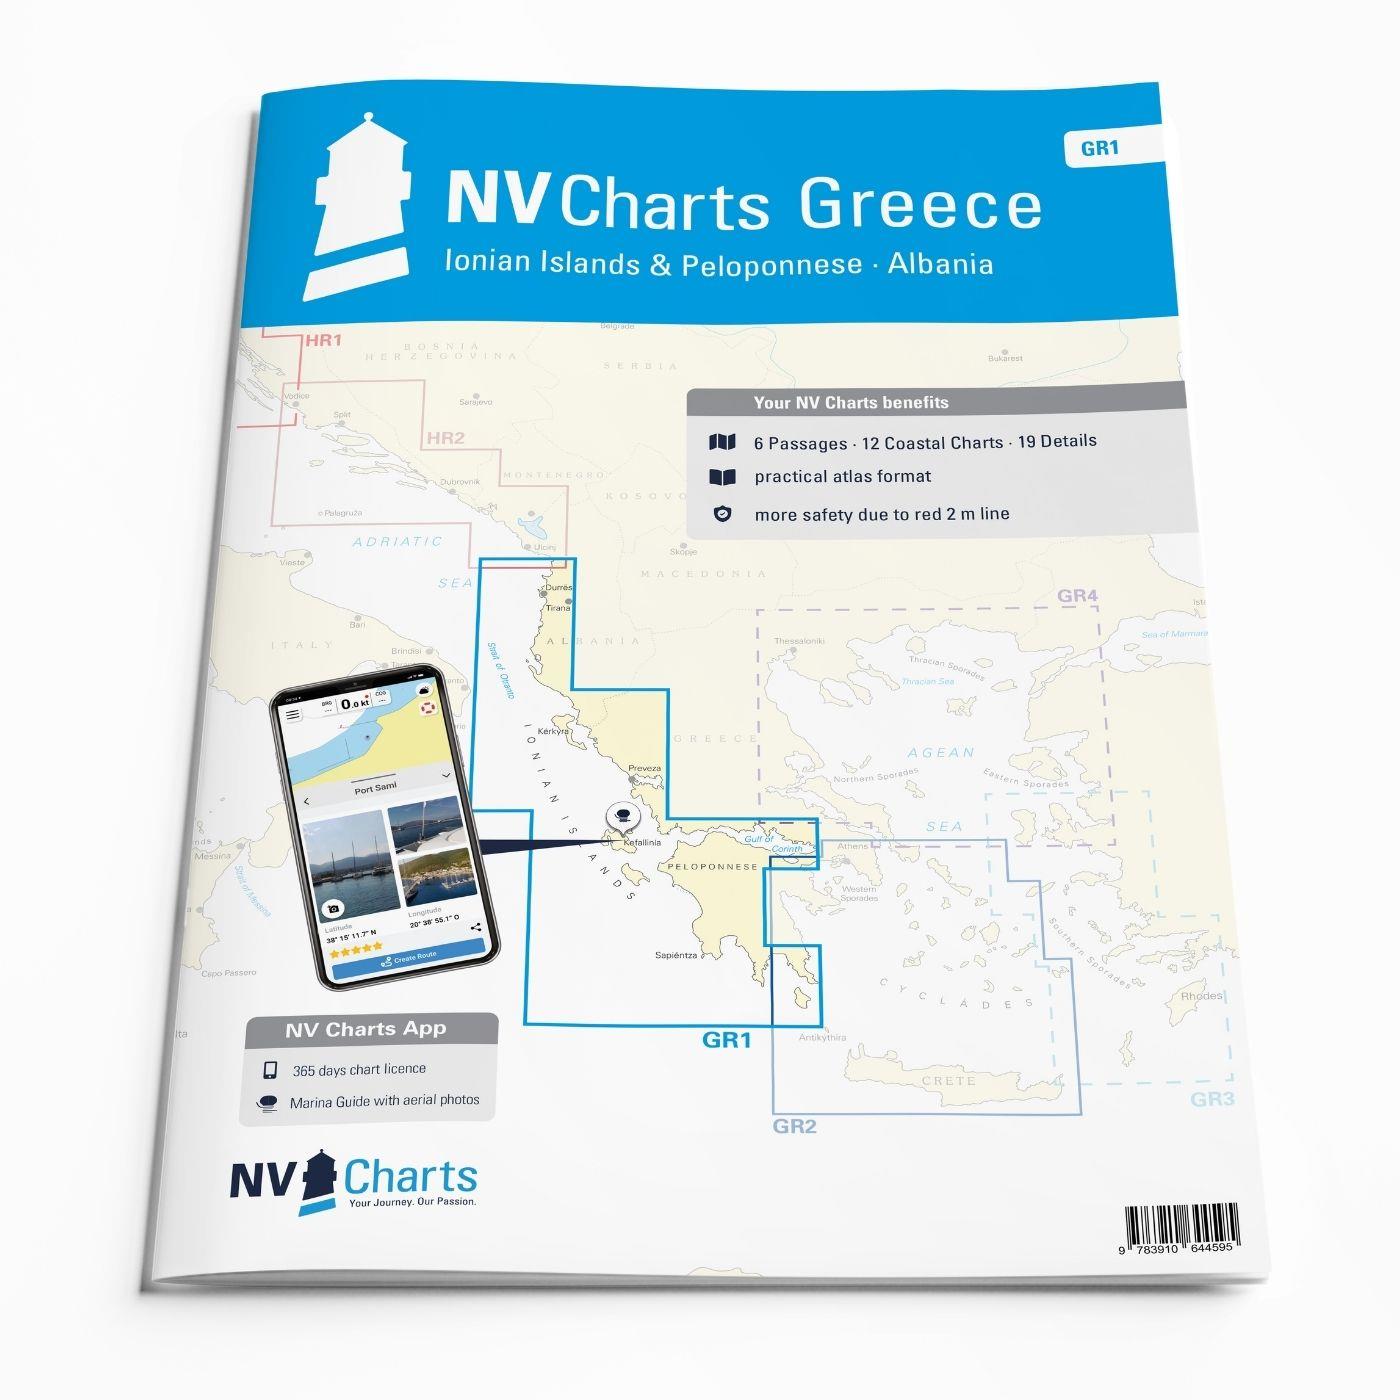 NV Charts Greece GR1 - Griechenland Ionische Inseln & Peloponnes - Albanien